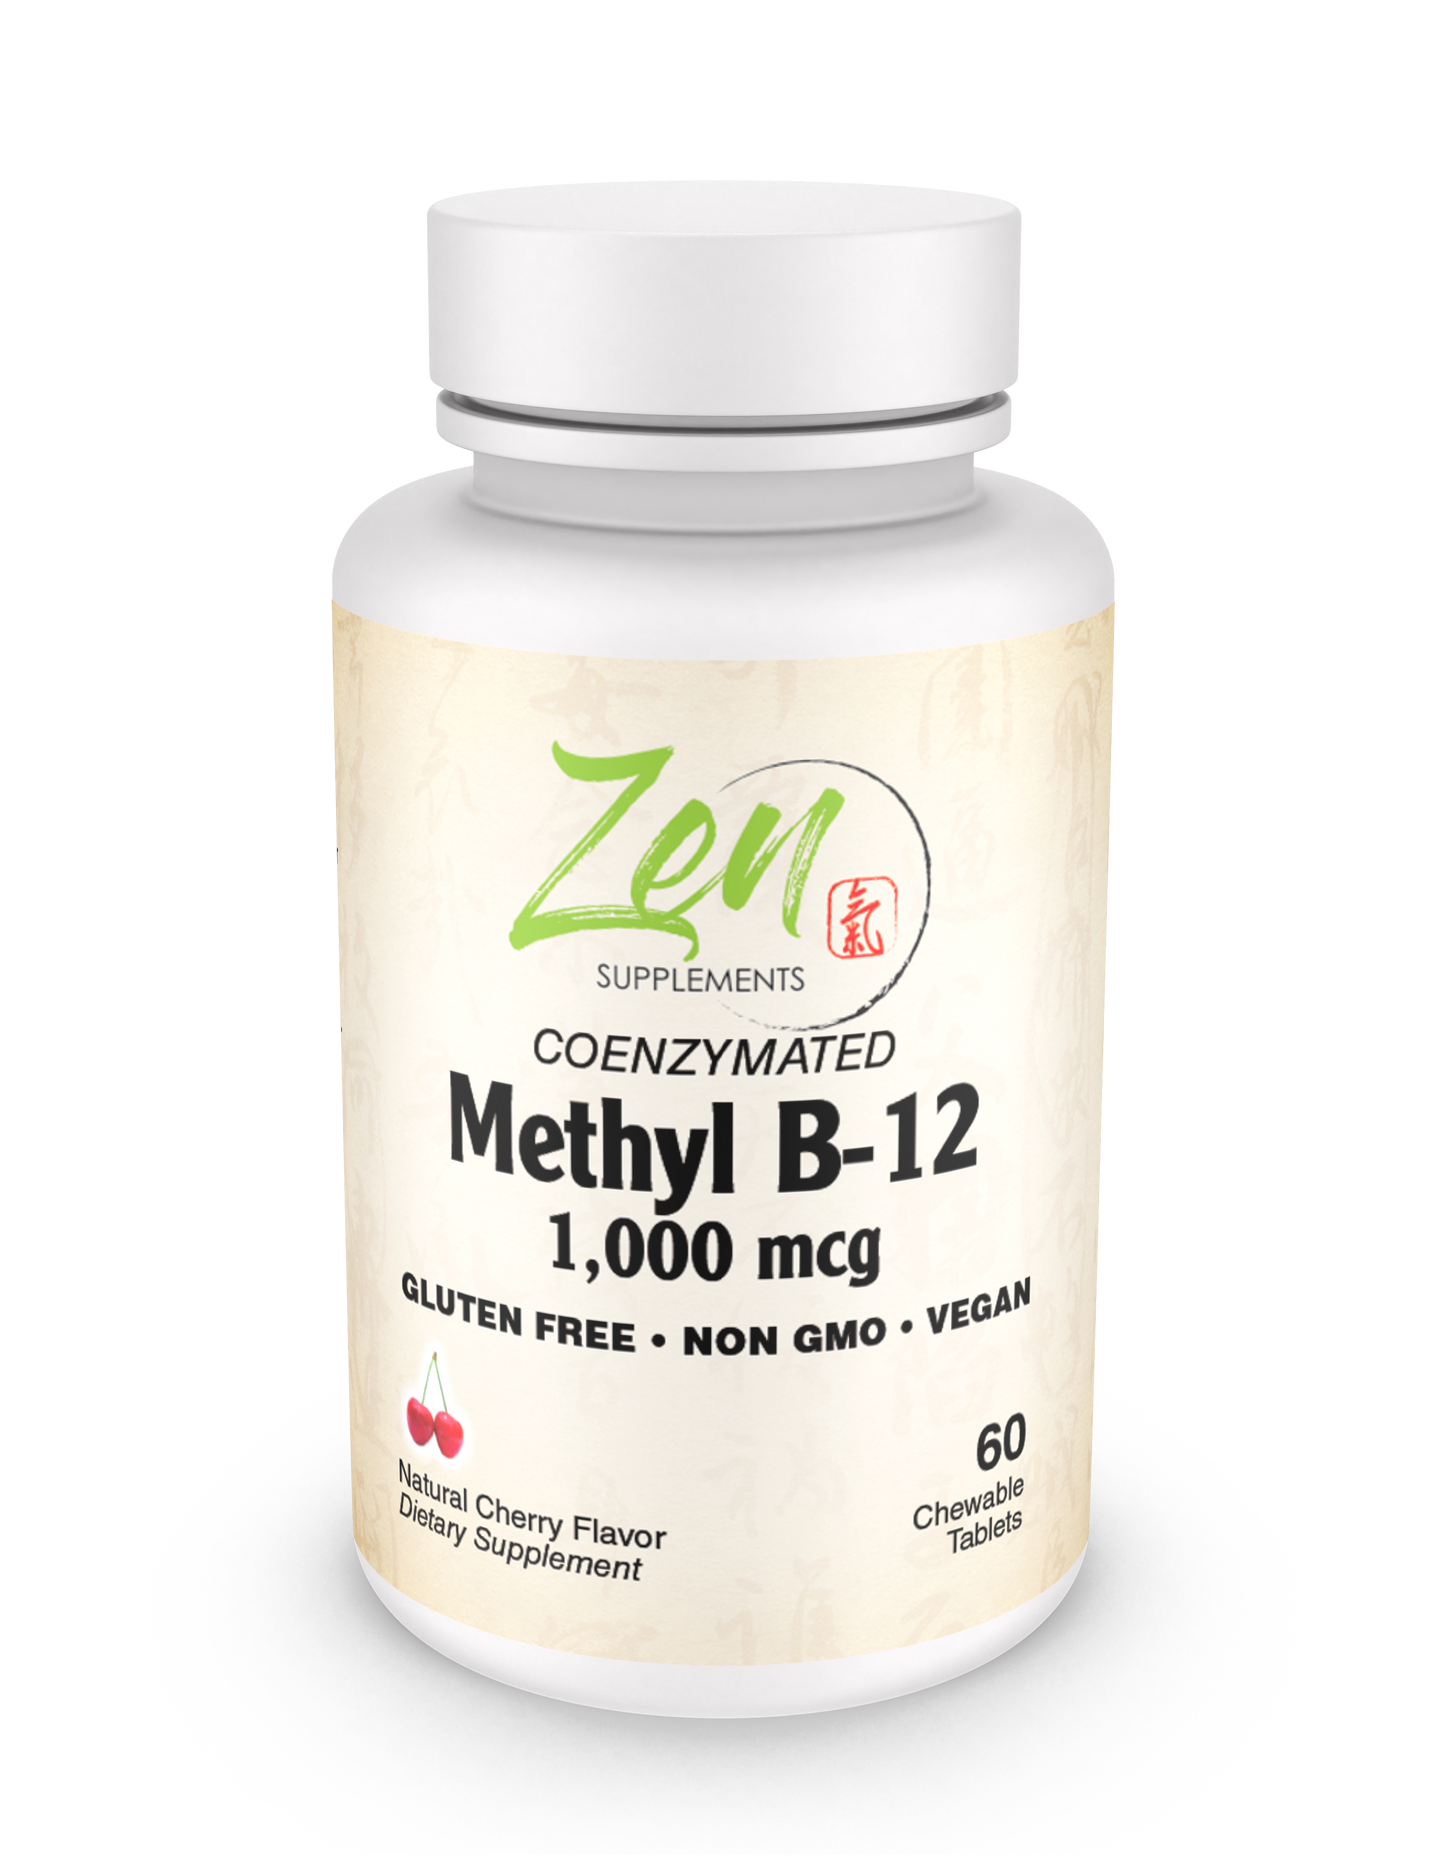 Coenzymated Methyl B-12 1,000 mcg